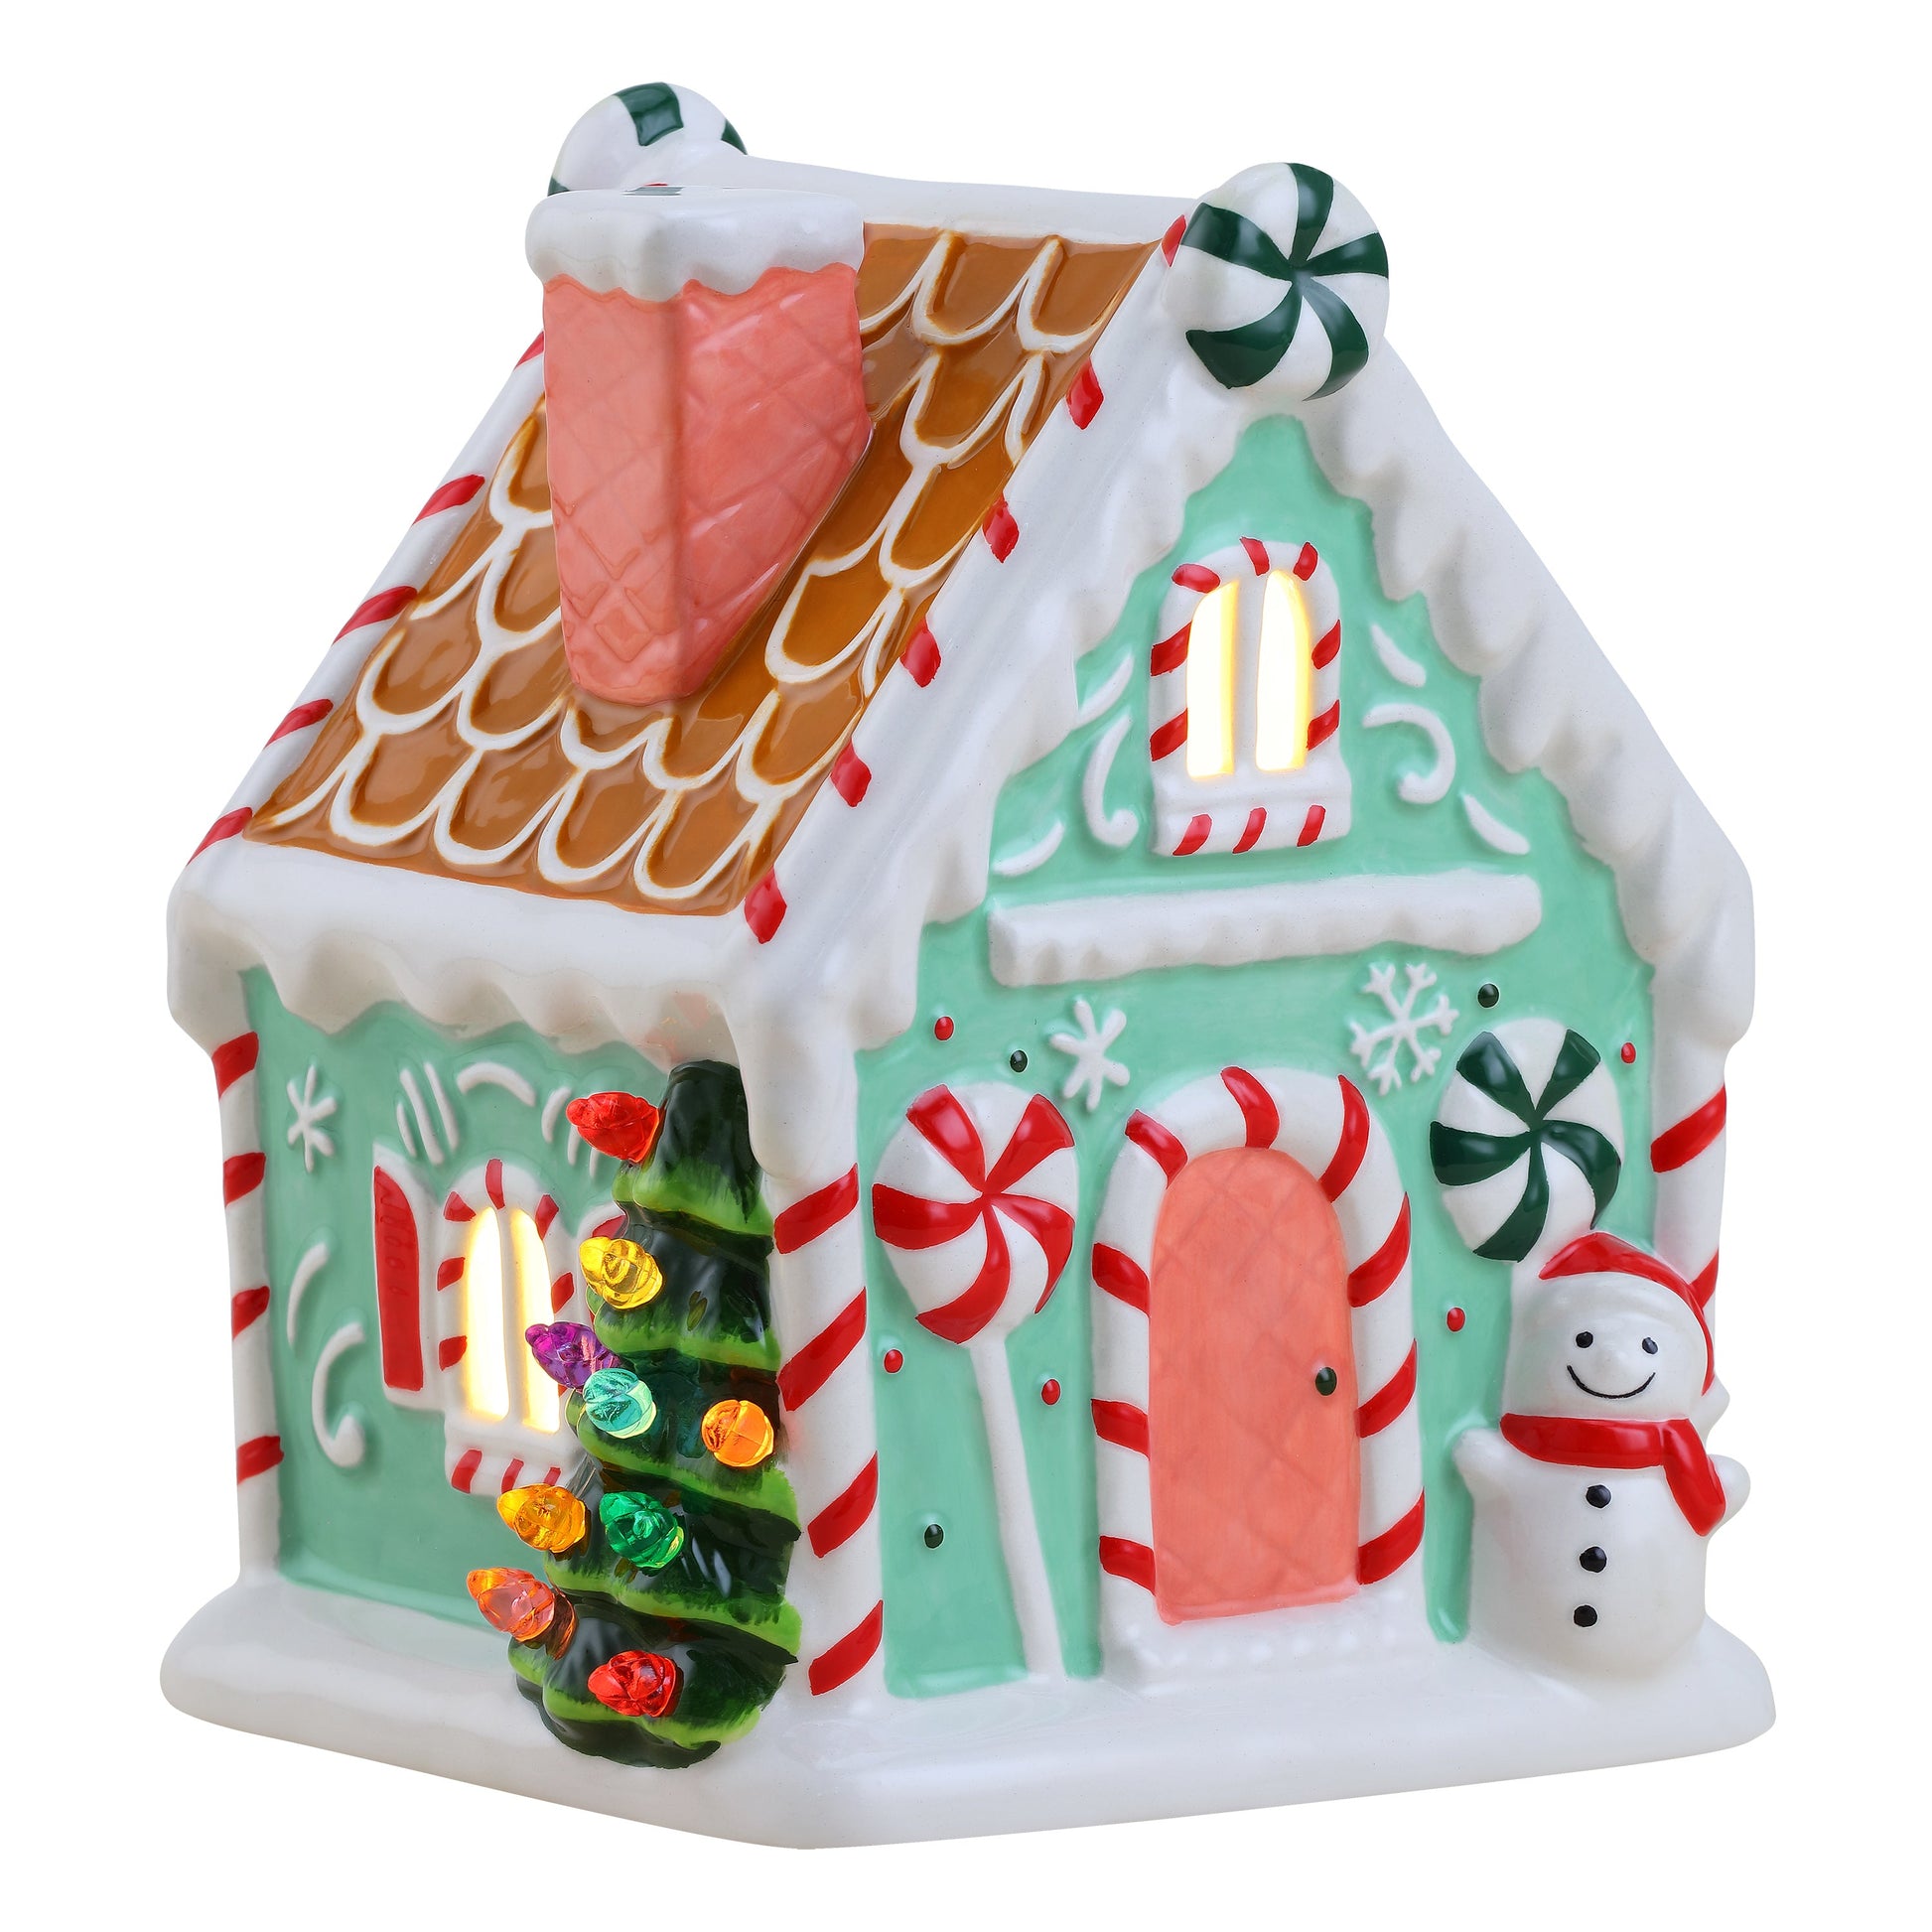 7" Nostalgic Ceramic Lit Gingerbread House - Teal - Mr. Christmas